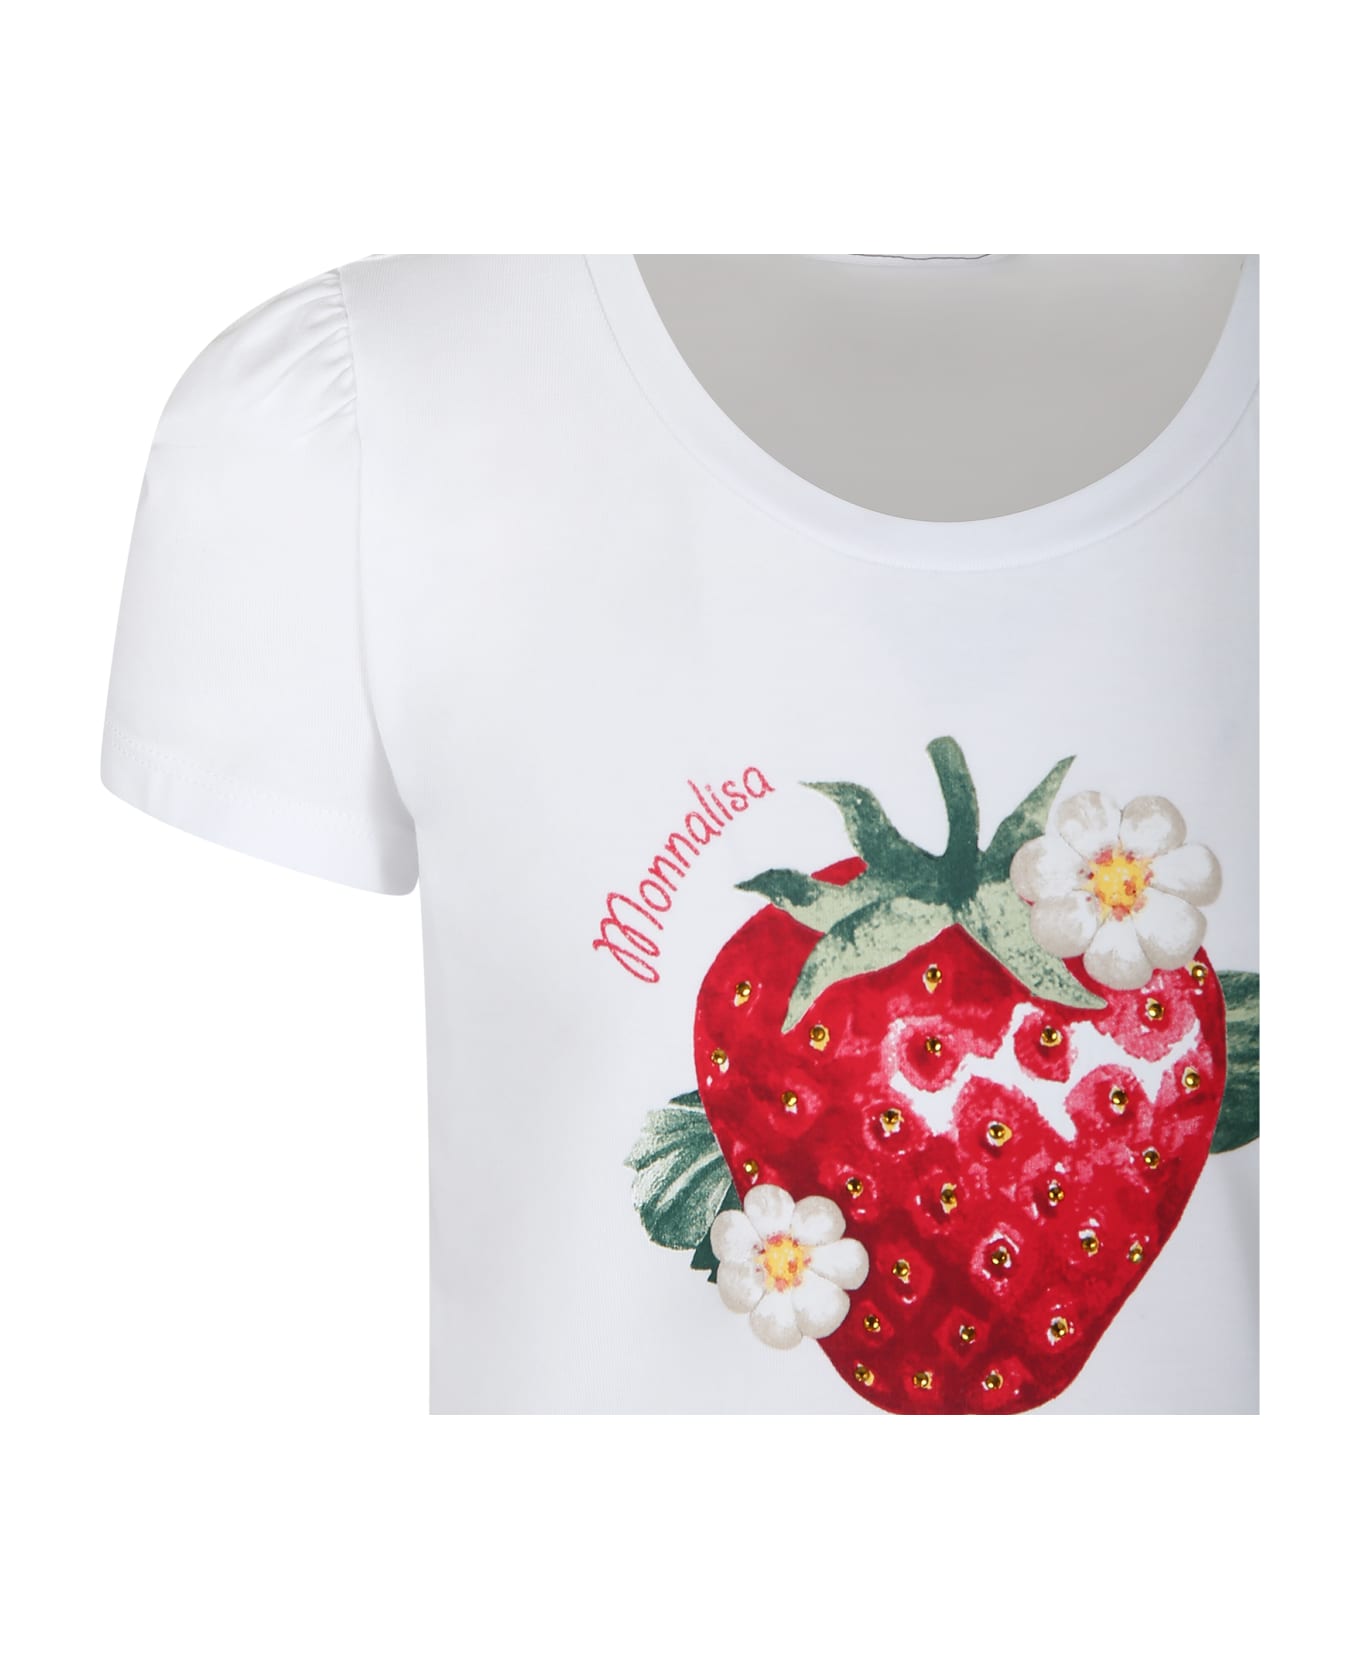 Monnalisa White Dress For Girl With Strawberry Print - White